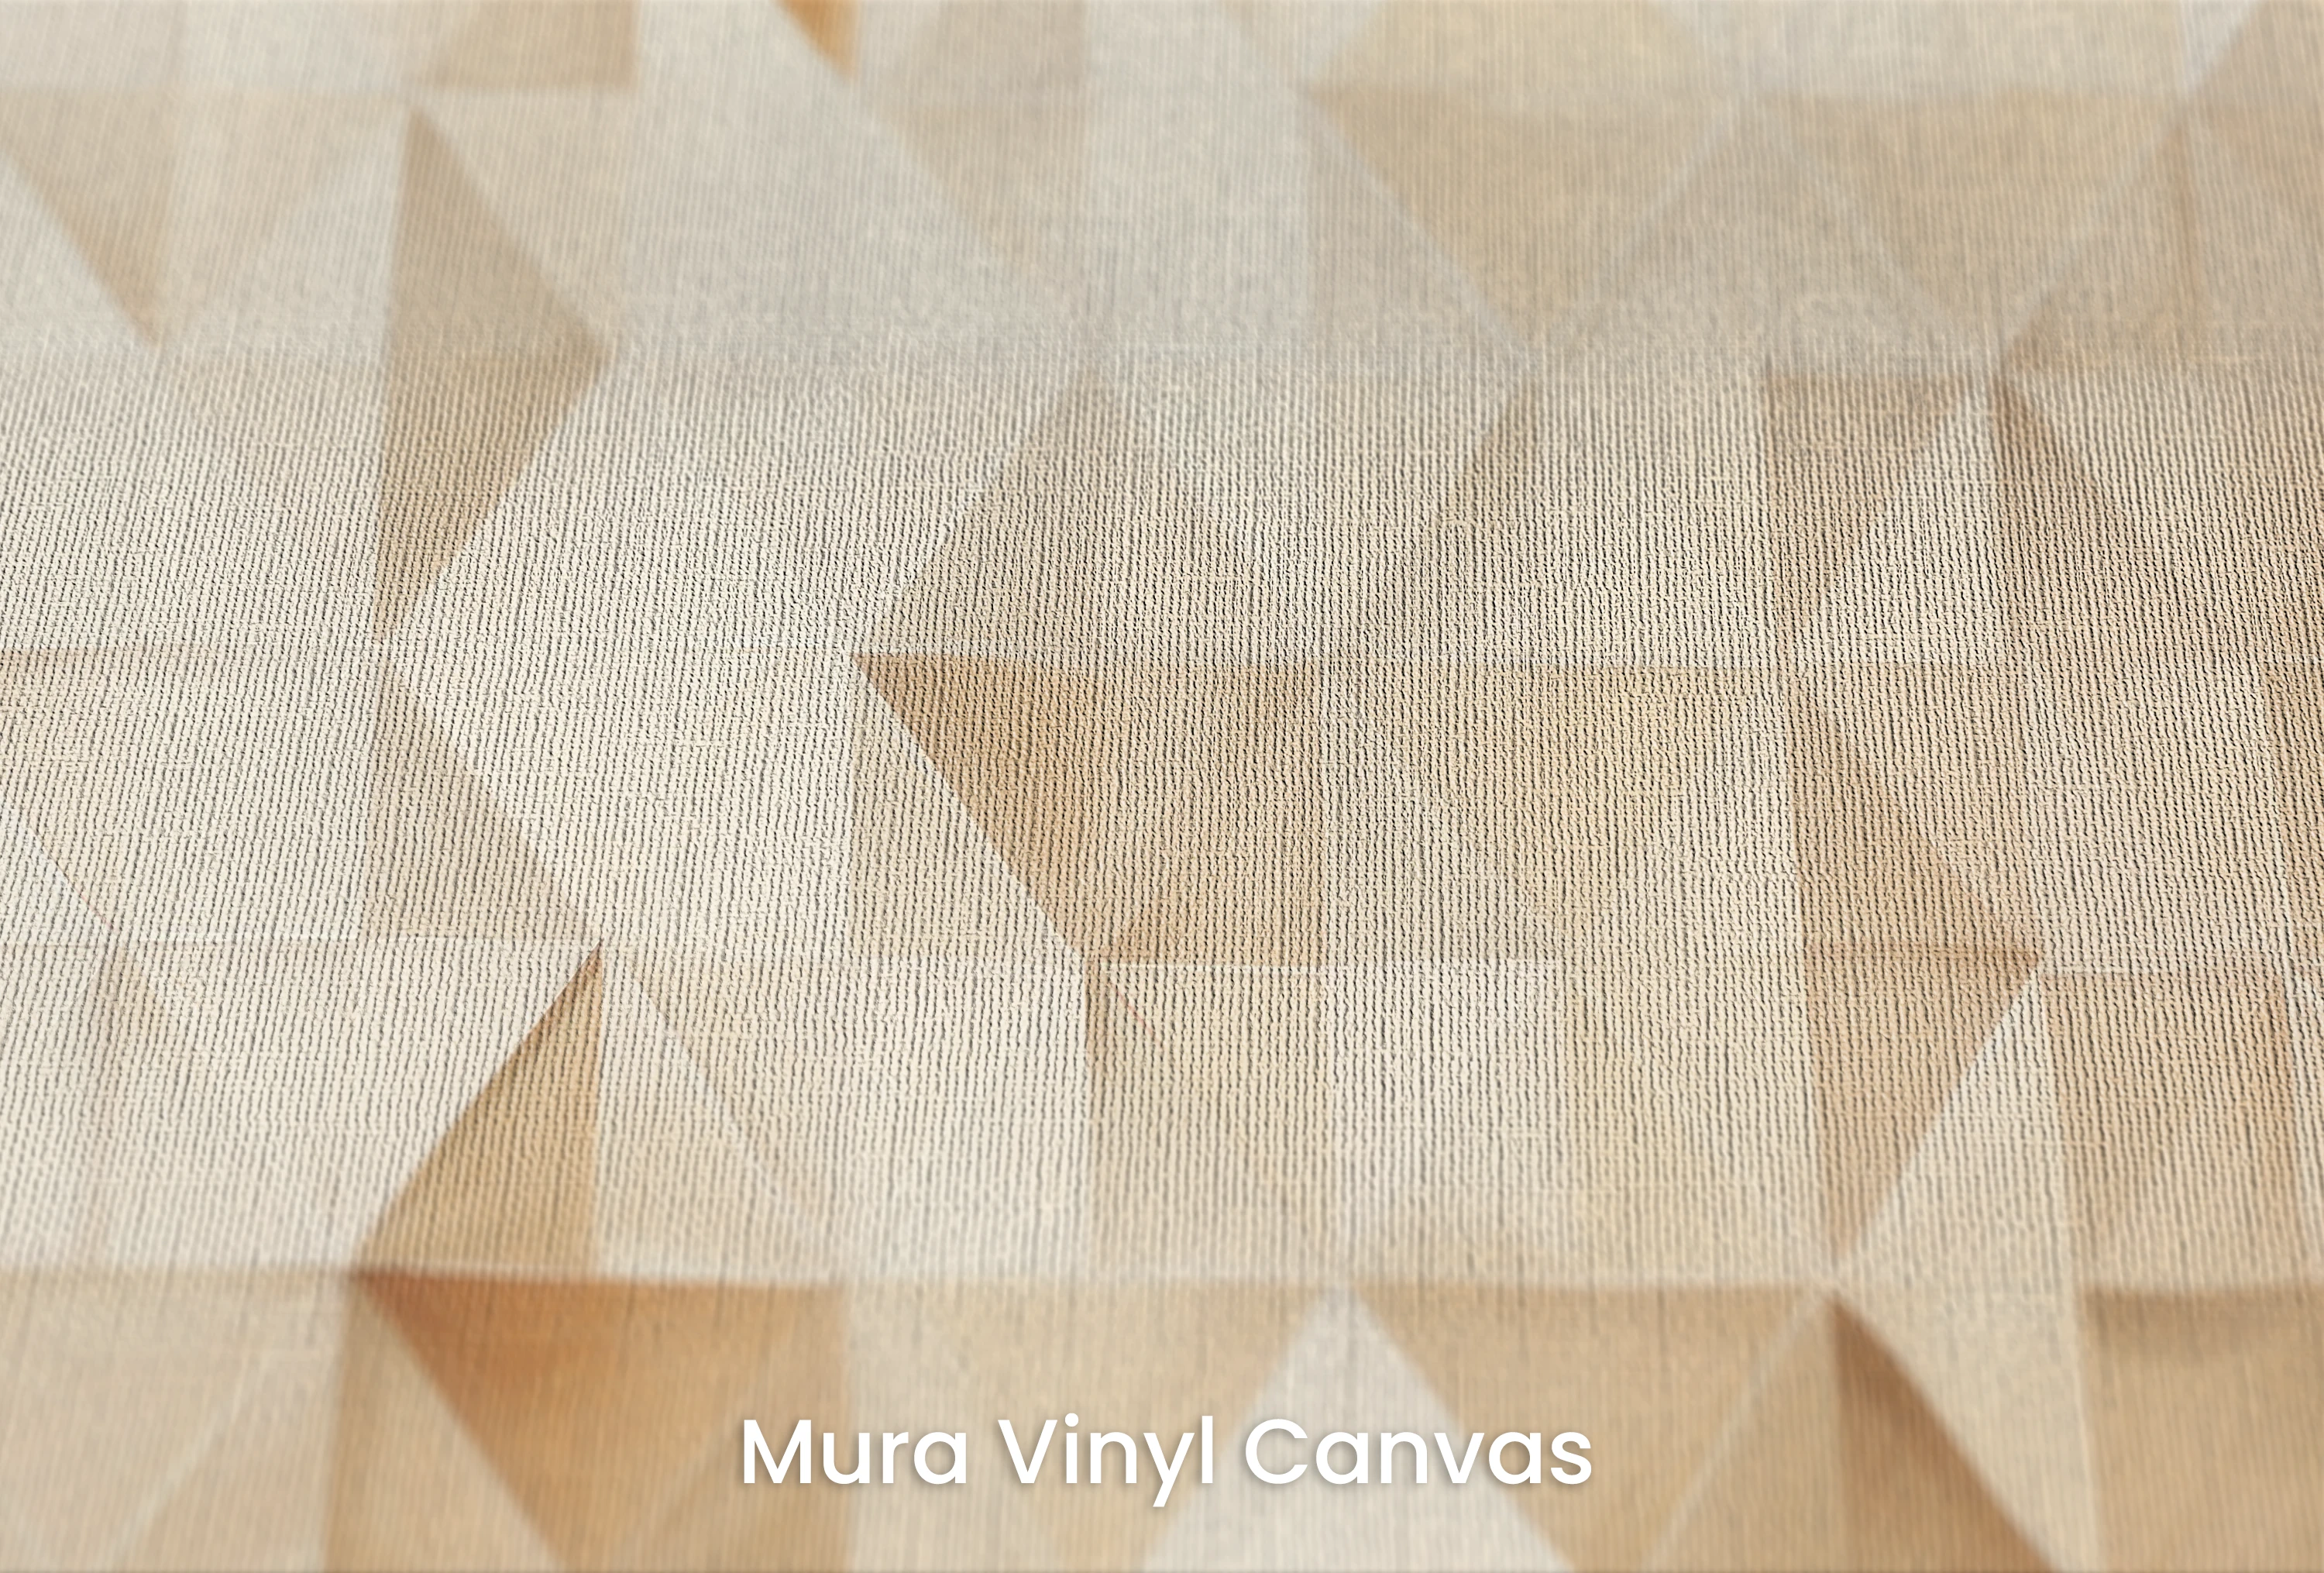 Mura Vinyl Canvas - Tapeta o fakturze naturalnego płótna